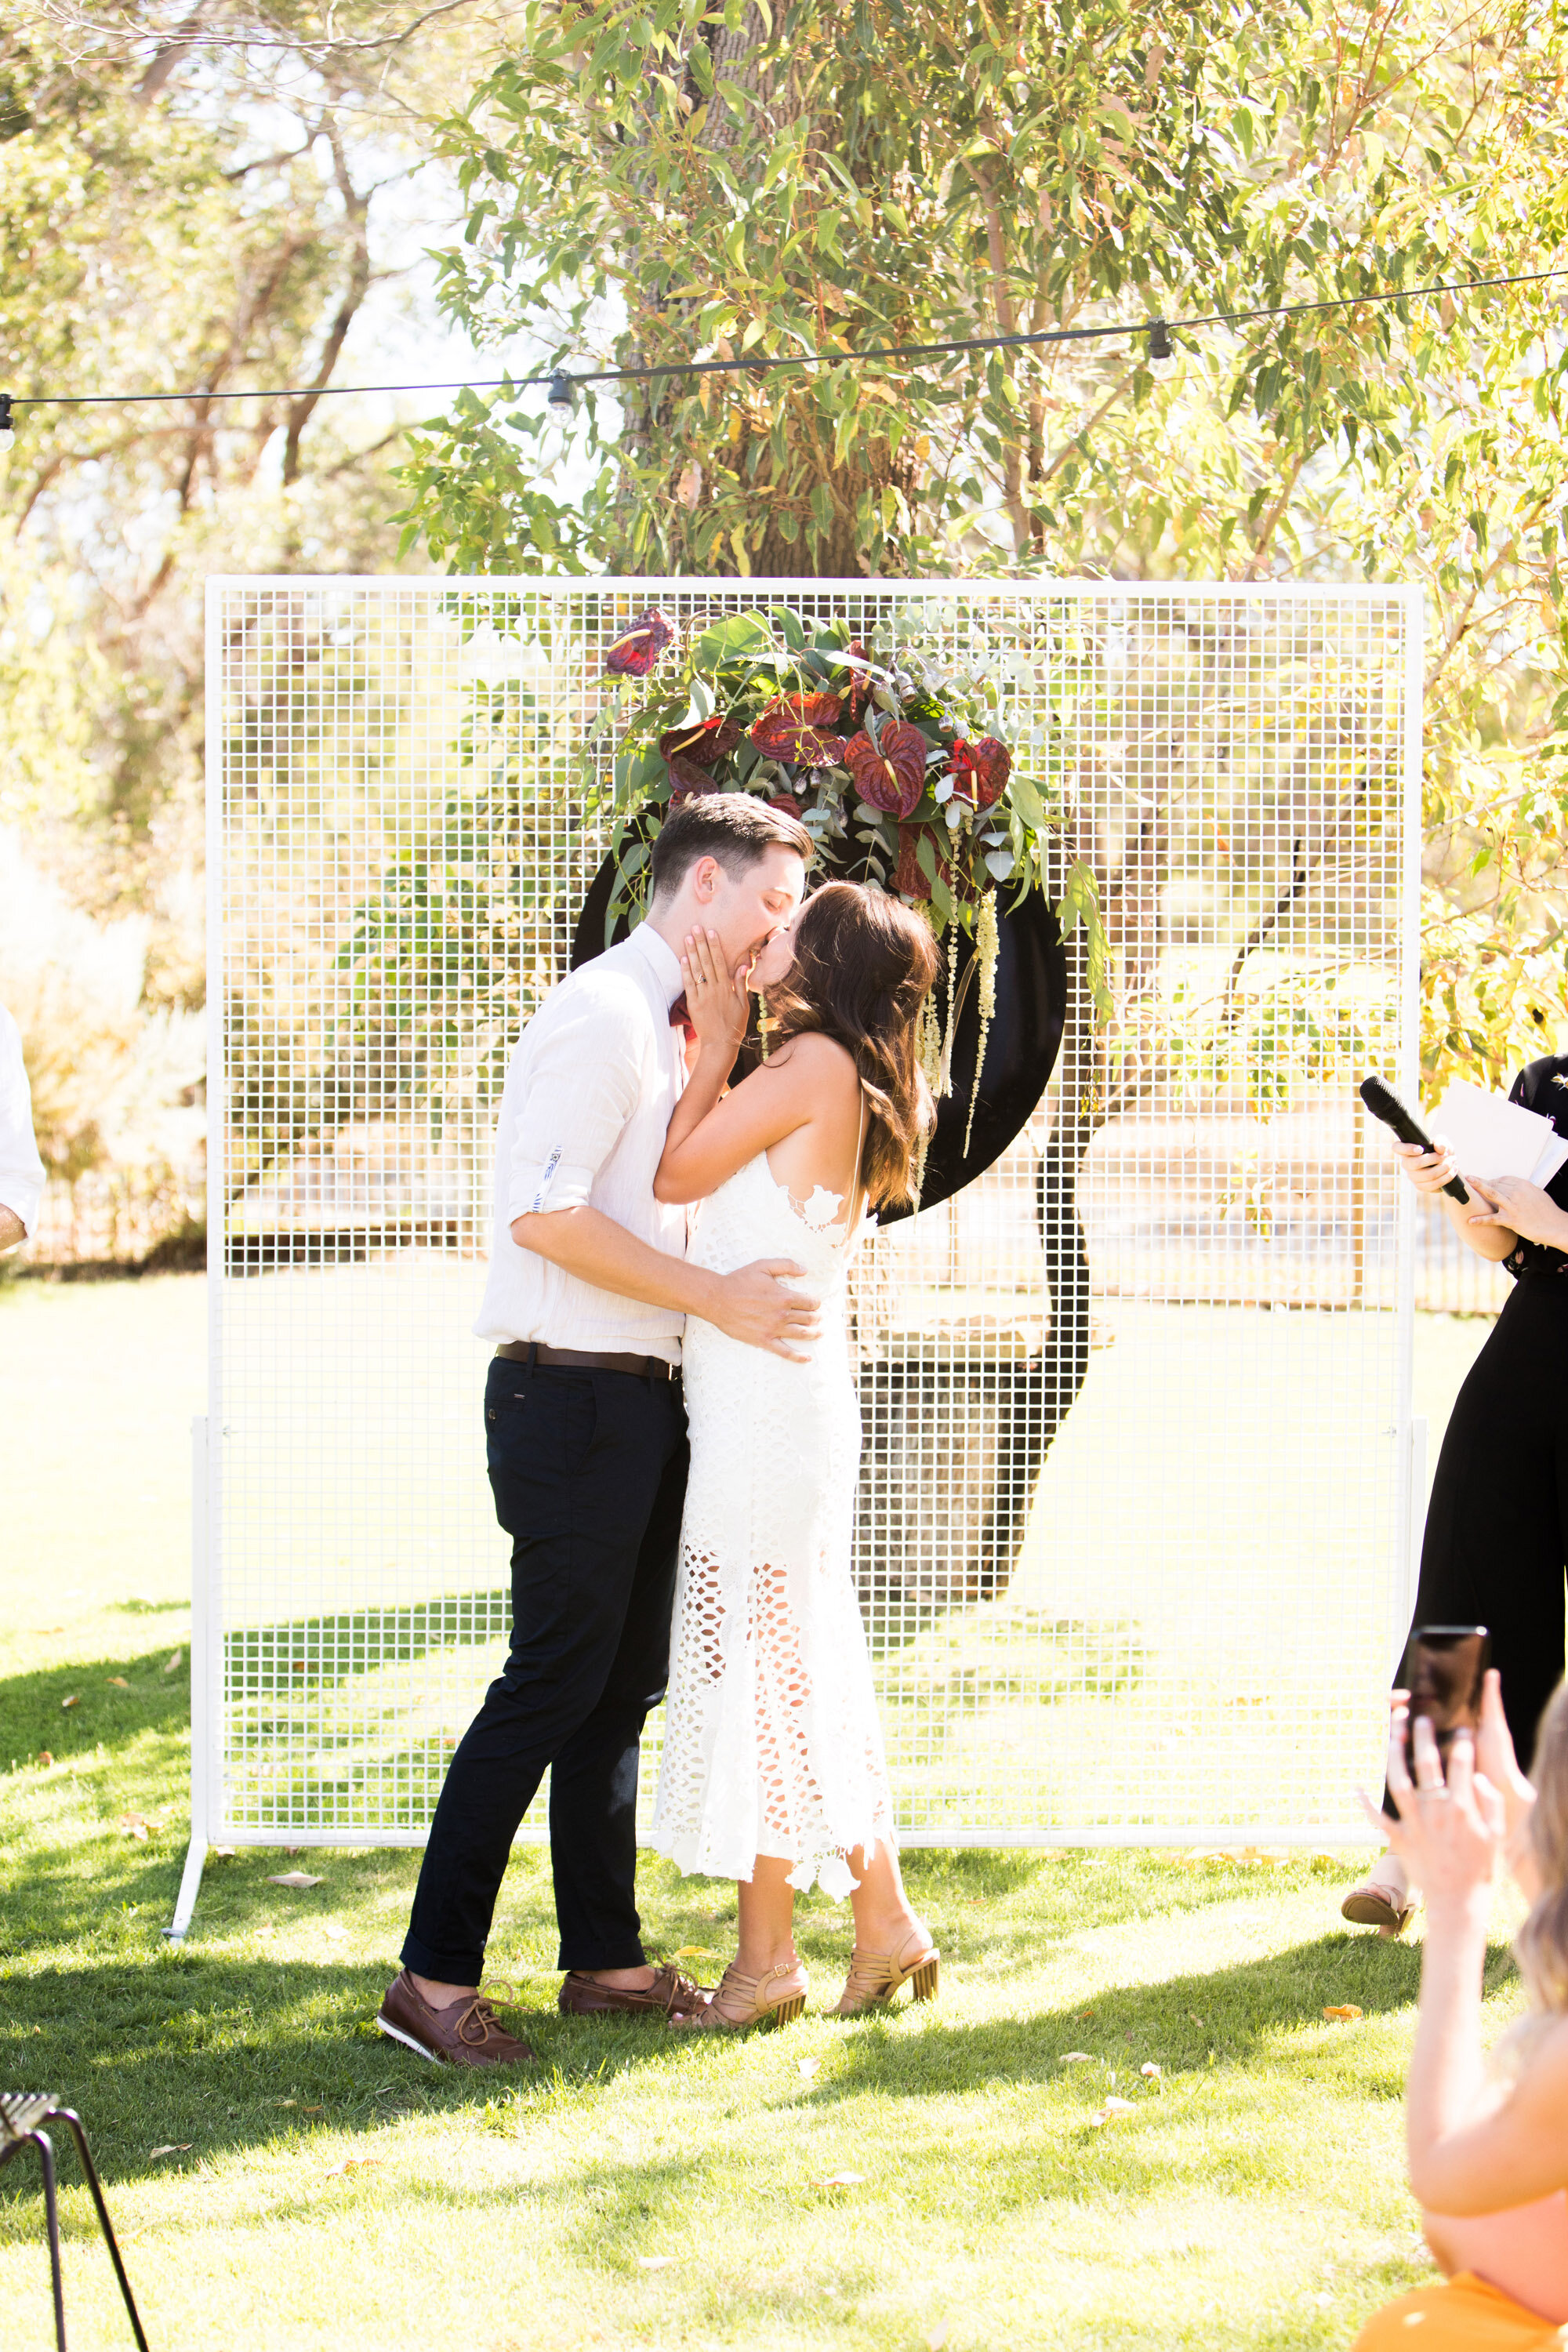 Perth Wedding Photographer - Ceremony & Thanks - DZuks - 270.jpg